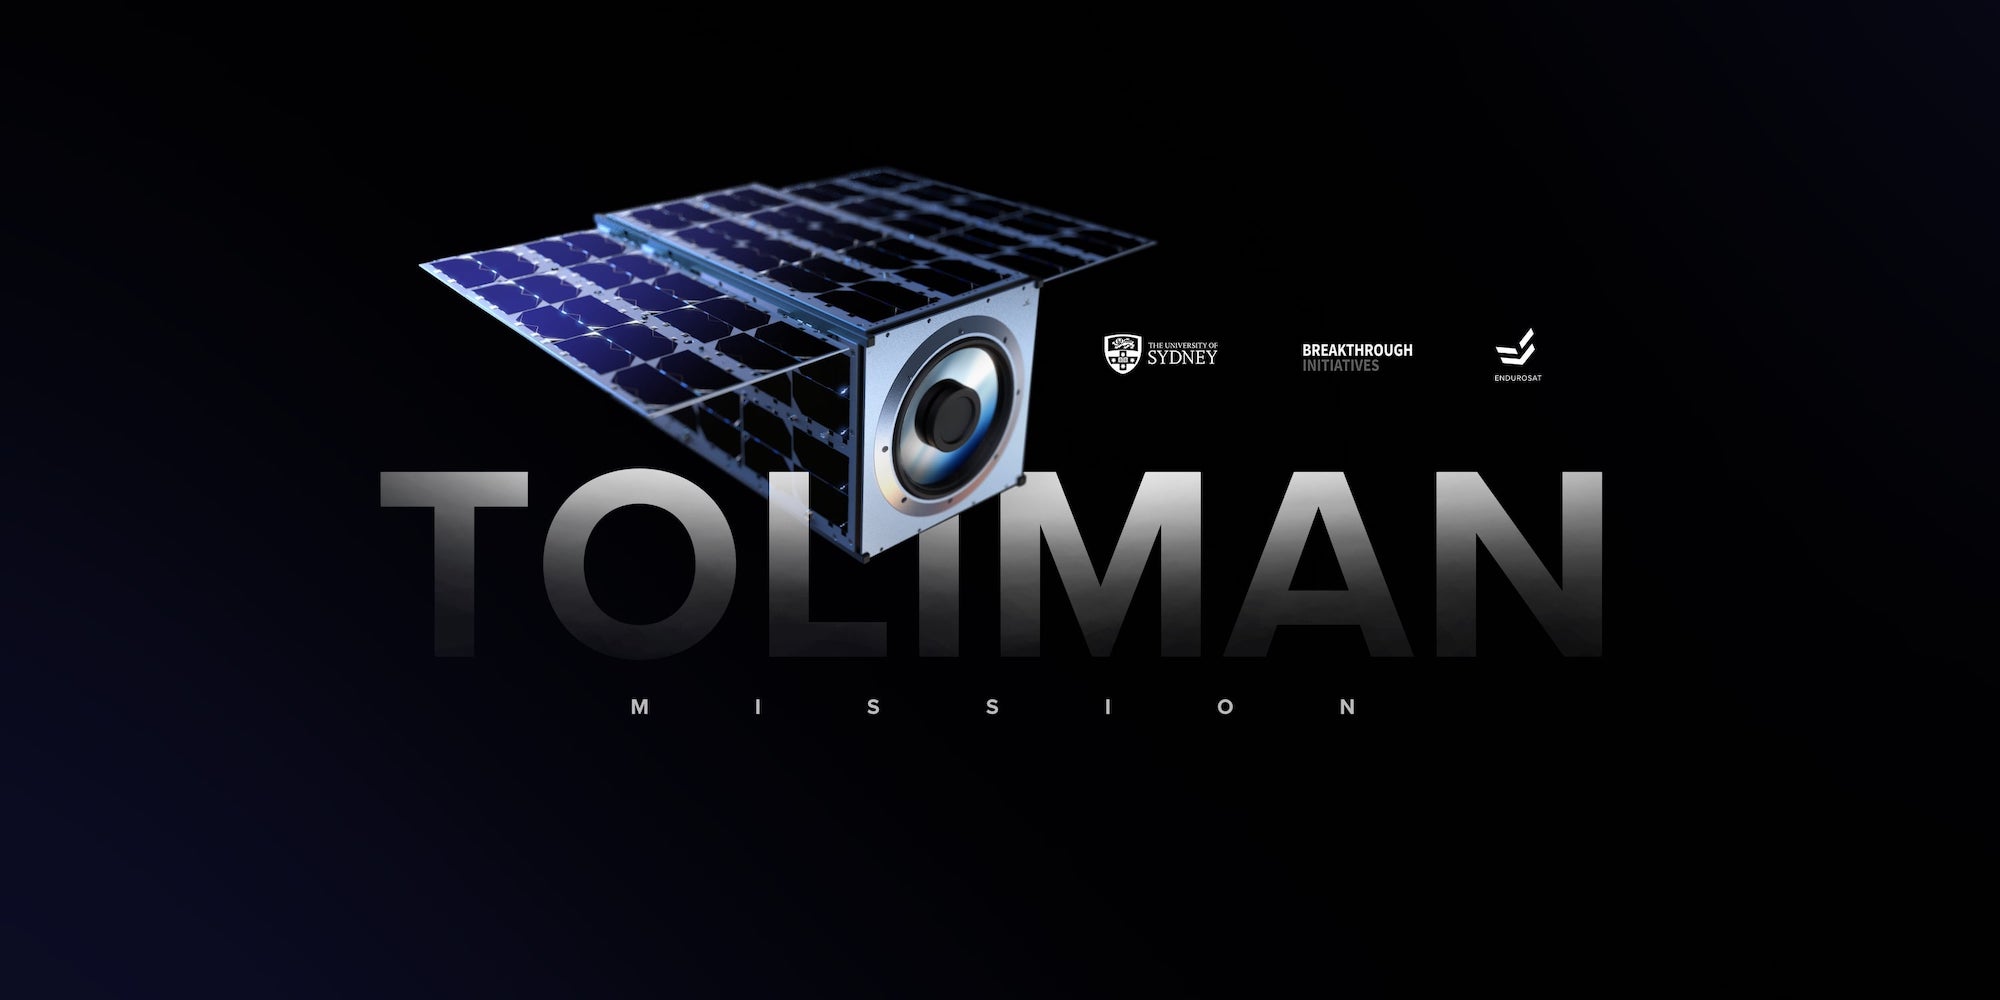 University of Sydney Breakthrough Initiatives TOLIMAN mission EnduroSat 16U MicroSat